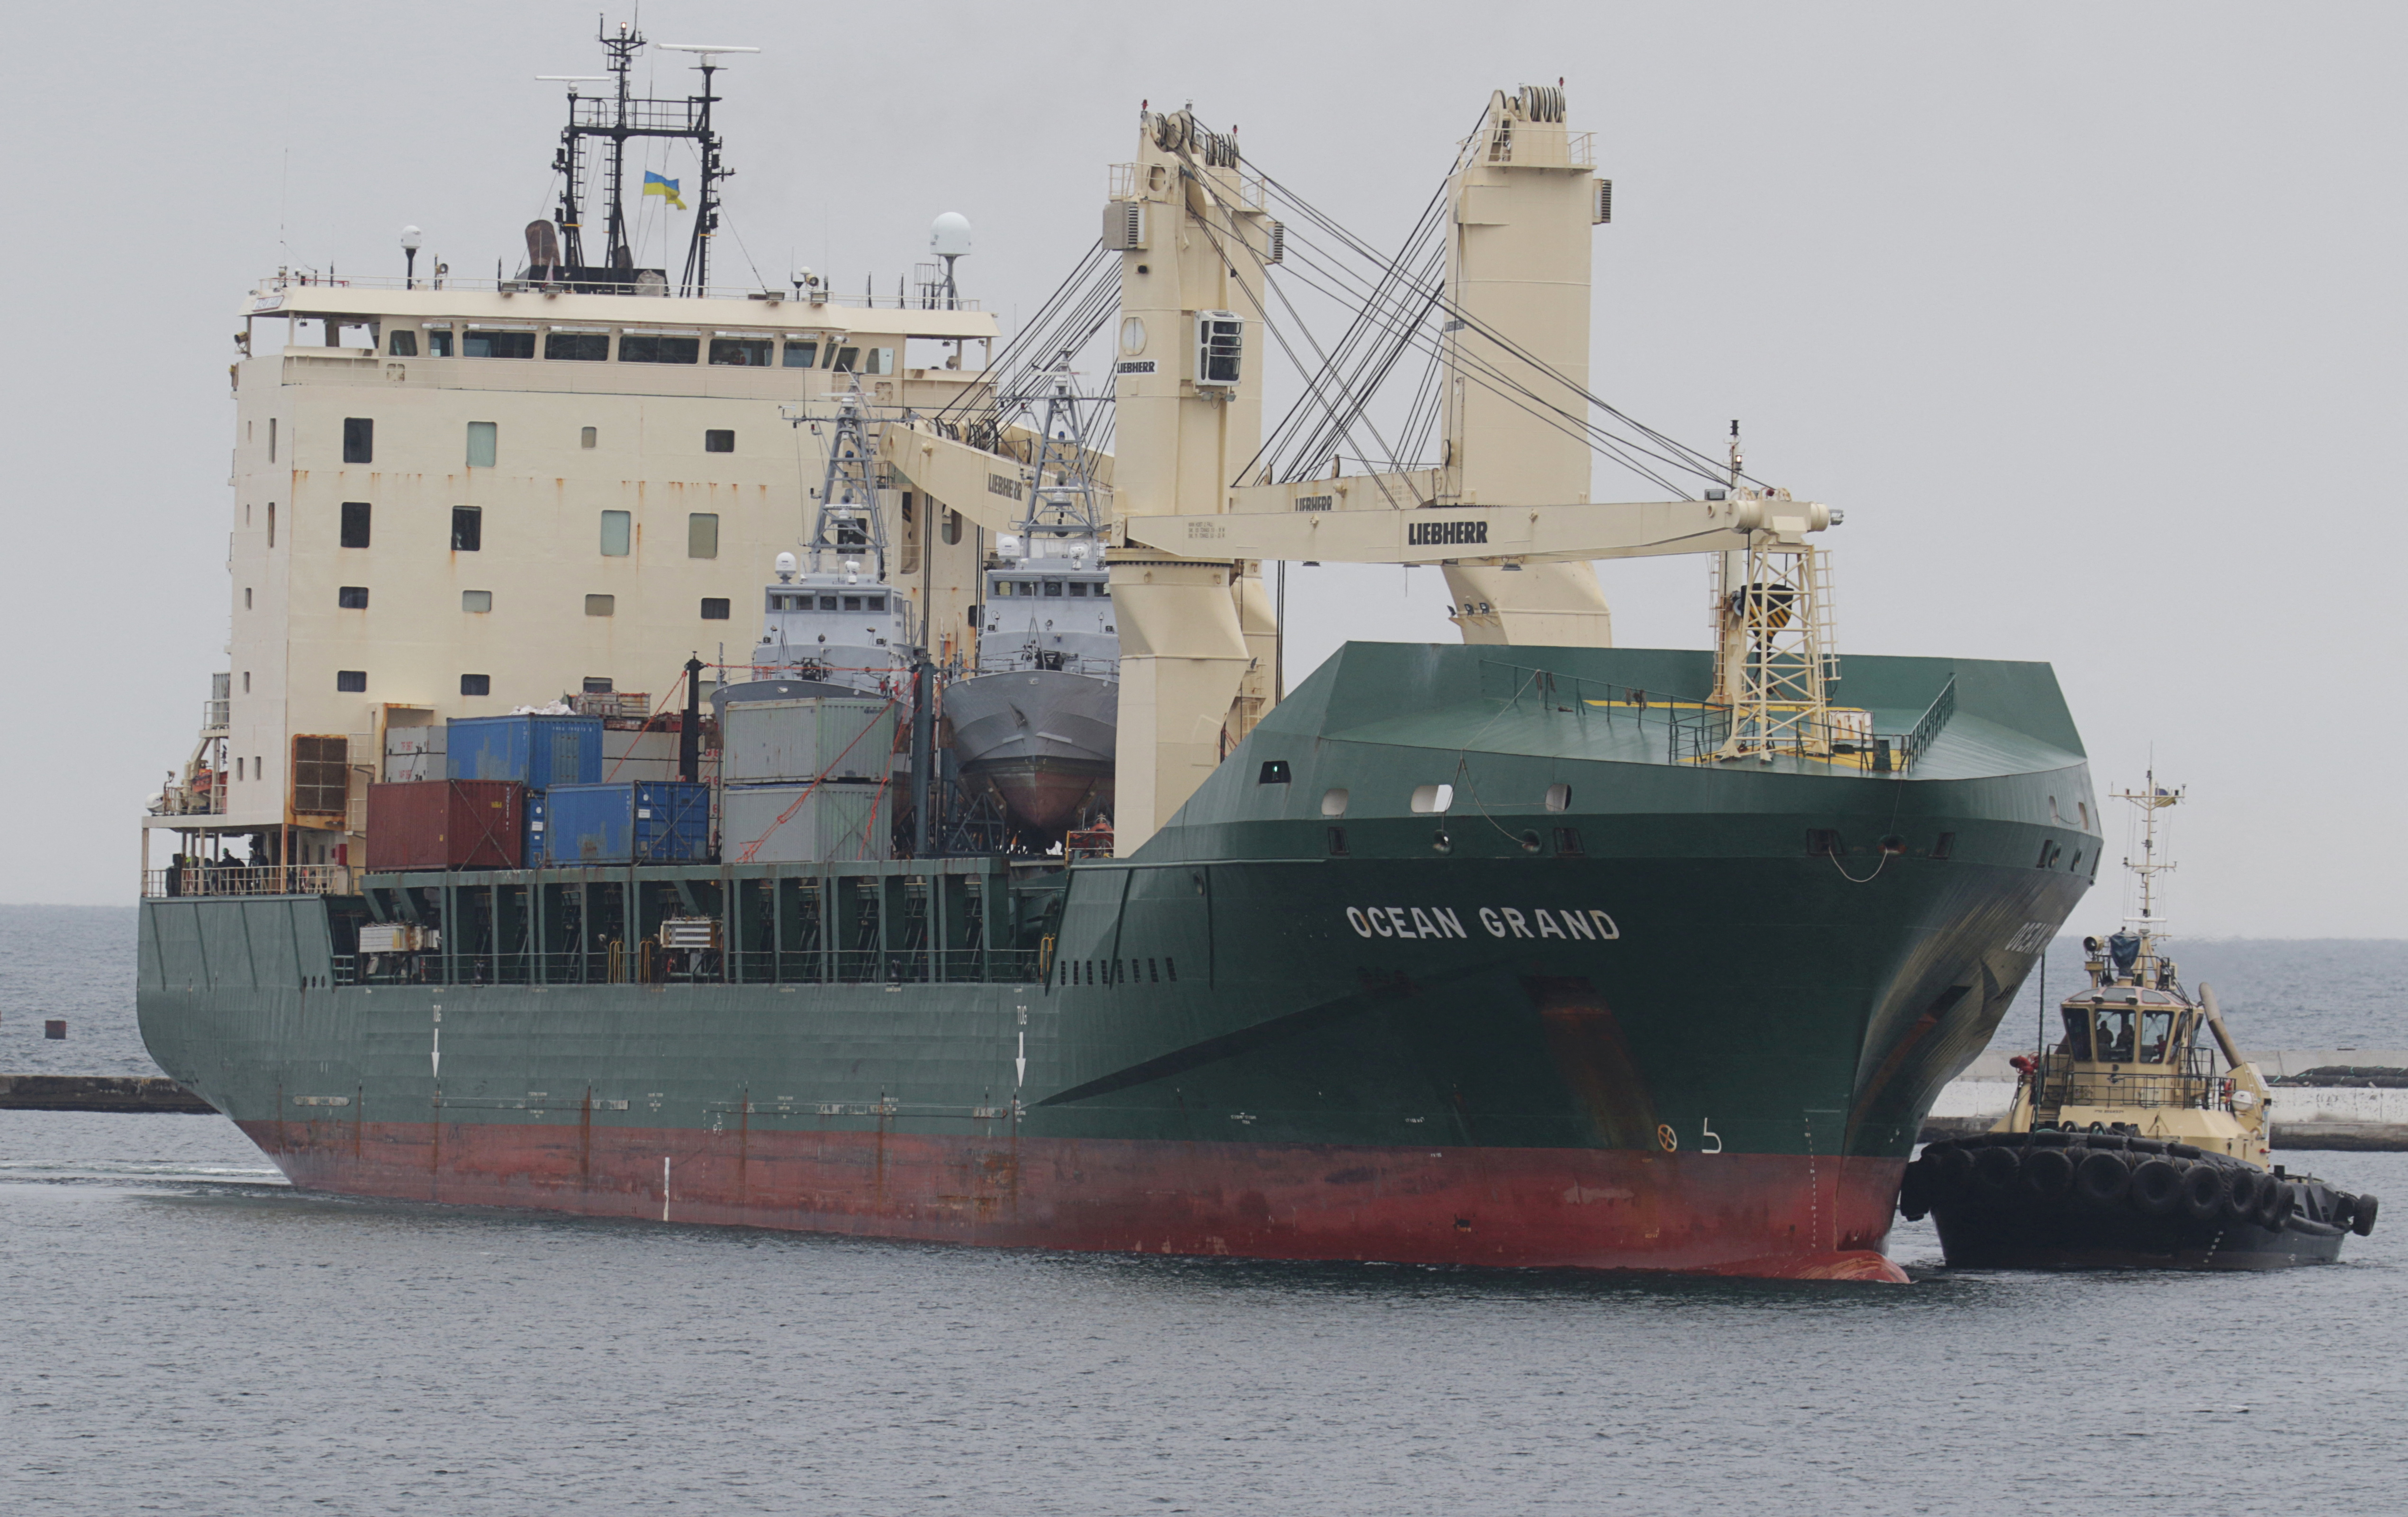 Cargo ship Ocean Grand carrying former U.S. Coast Guard patrol boats arrives at the Black Sea port of Odessa